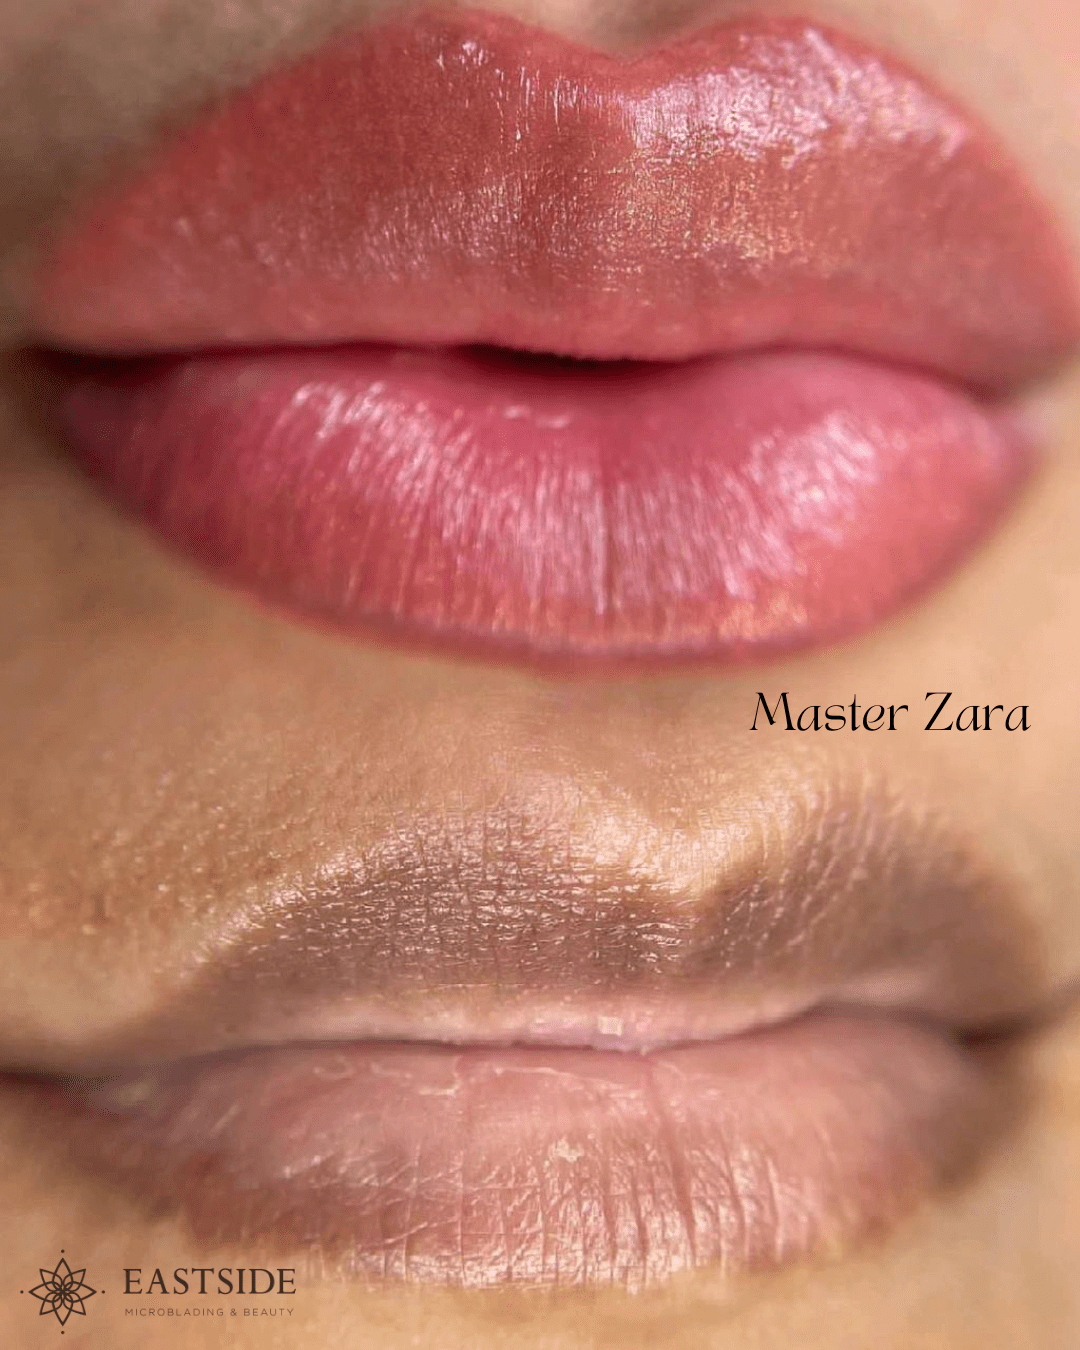 lip blushing treatment